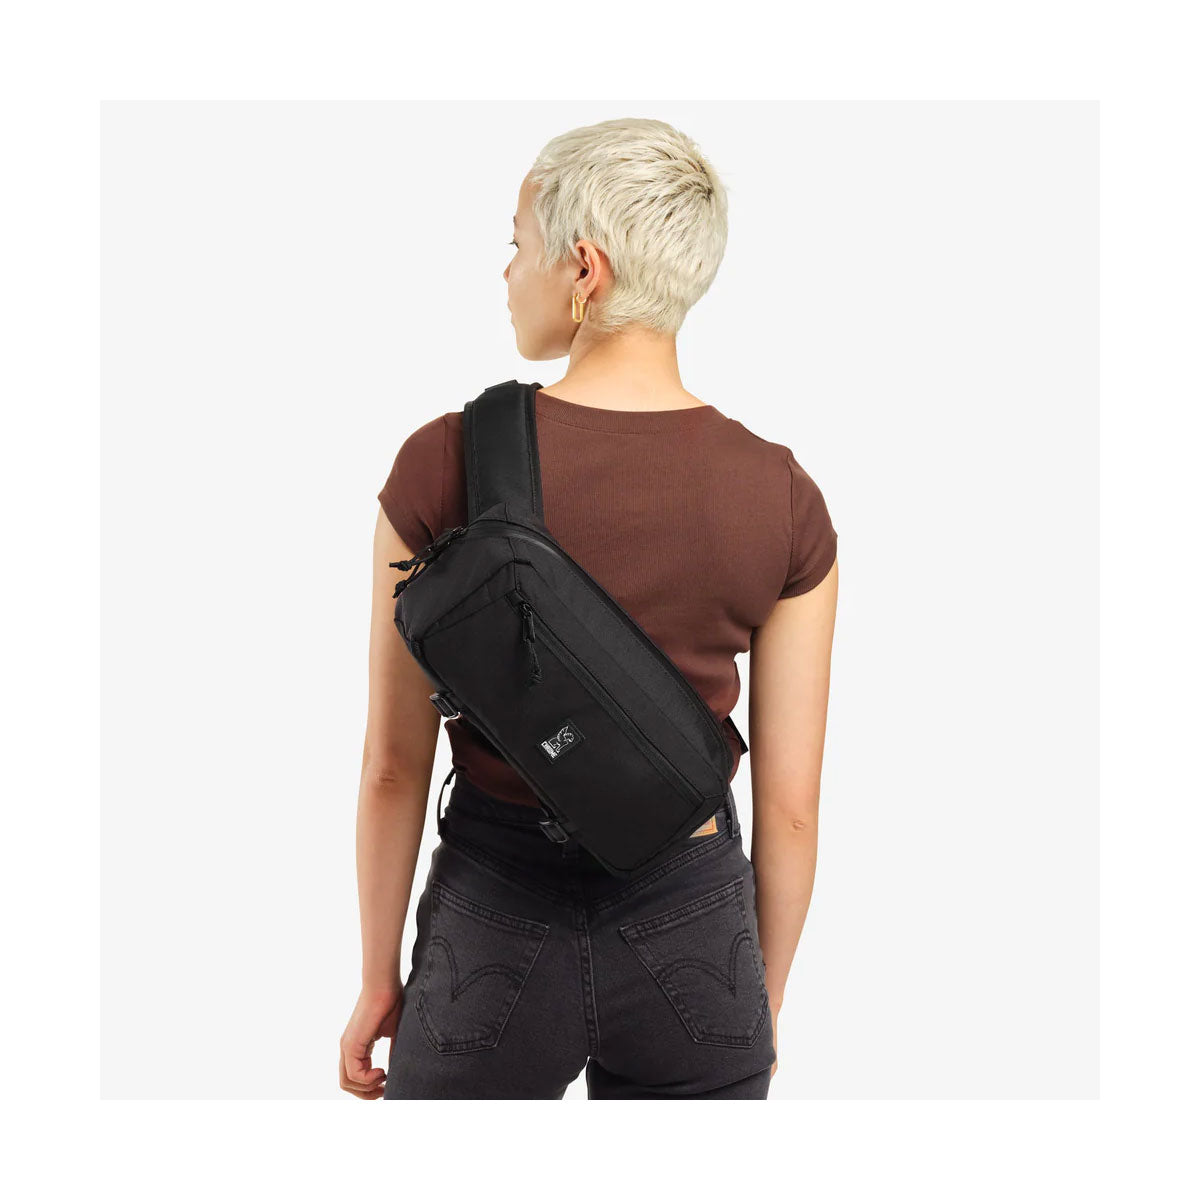 Mini Kadet Messenger Sling Bag by Chrome Industries | The Bag Creature